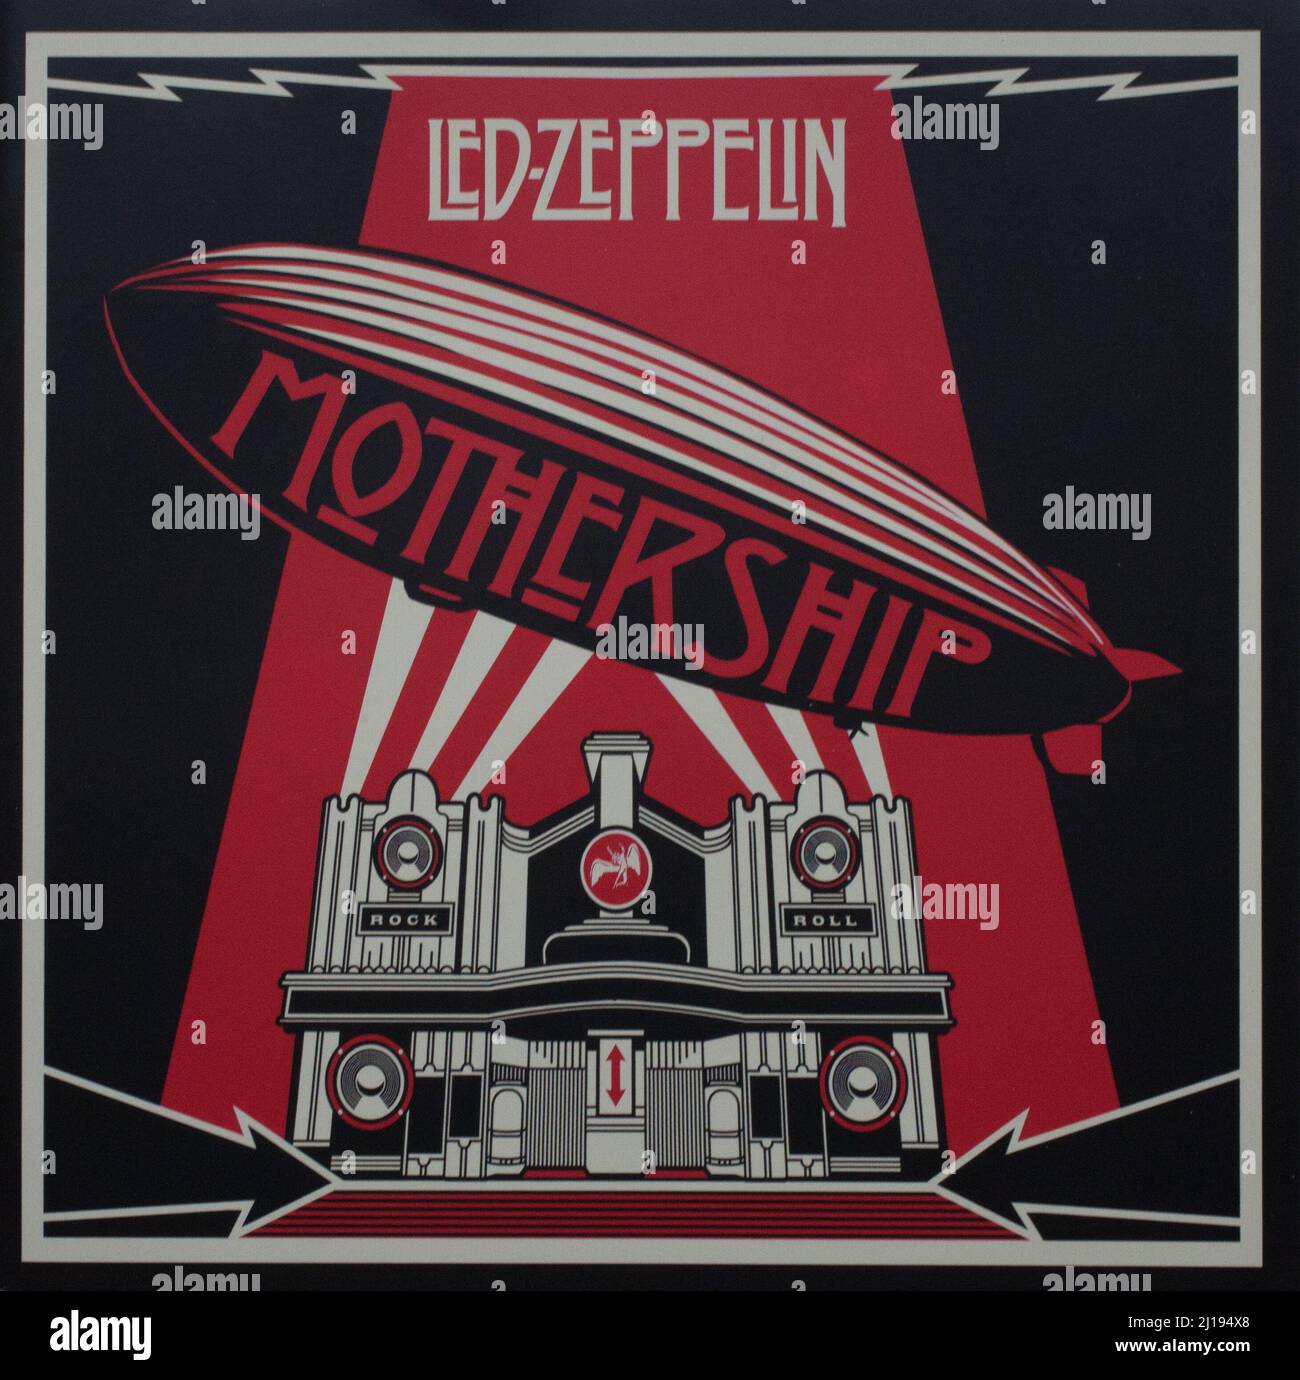 Das CD-Album Cover zu Mothership von LED Zeppelin Stockfotografie - Alamy